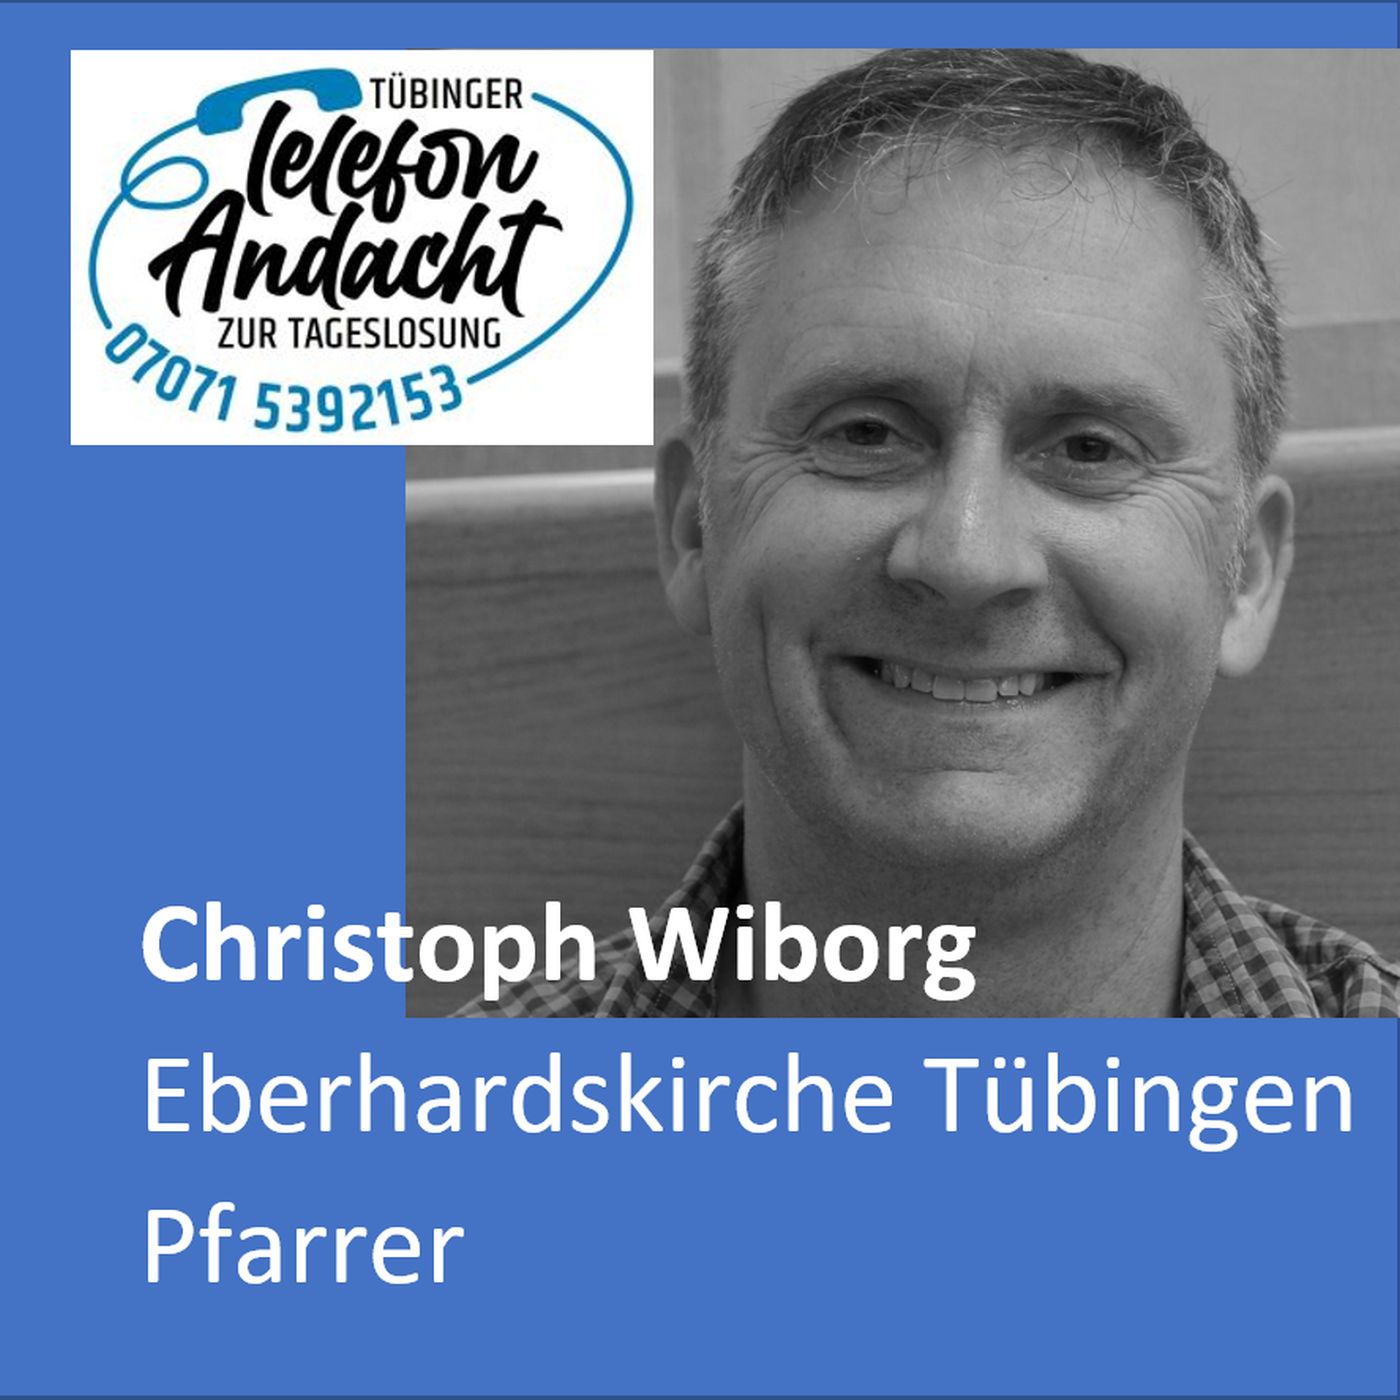 24 04 15 Christoph Wiborg